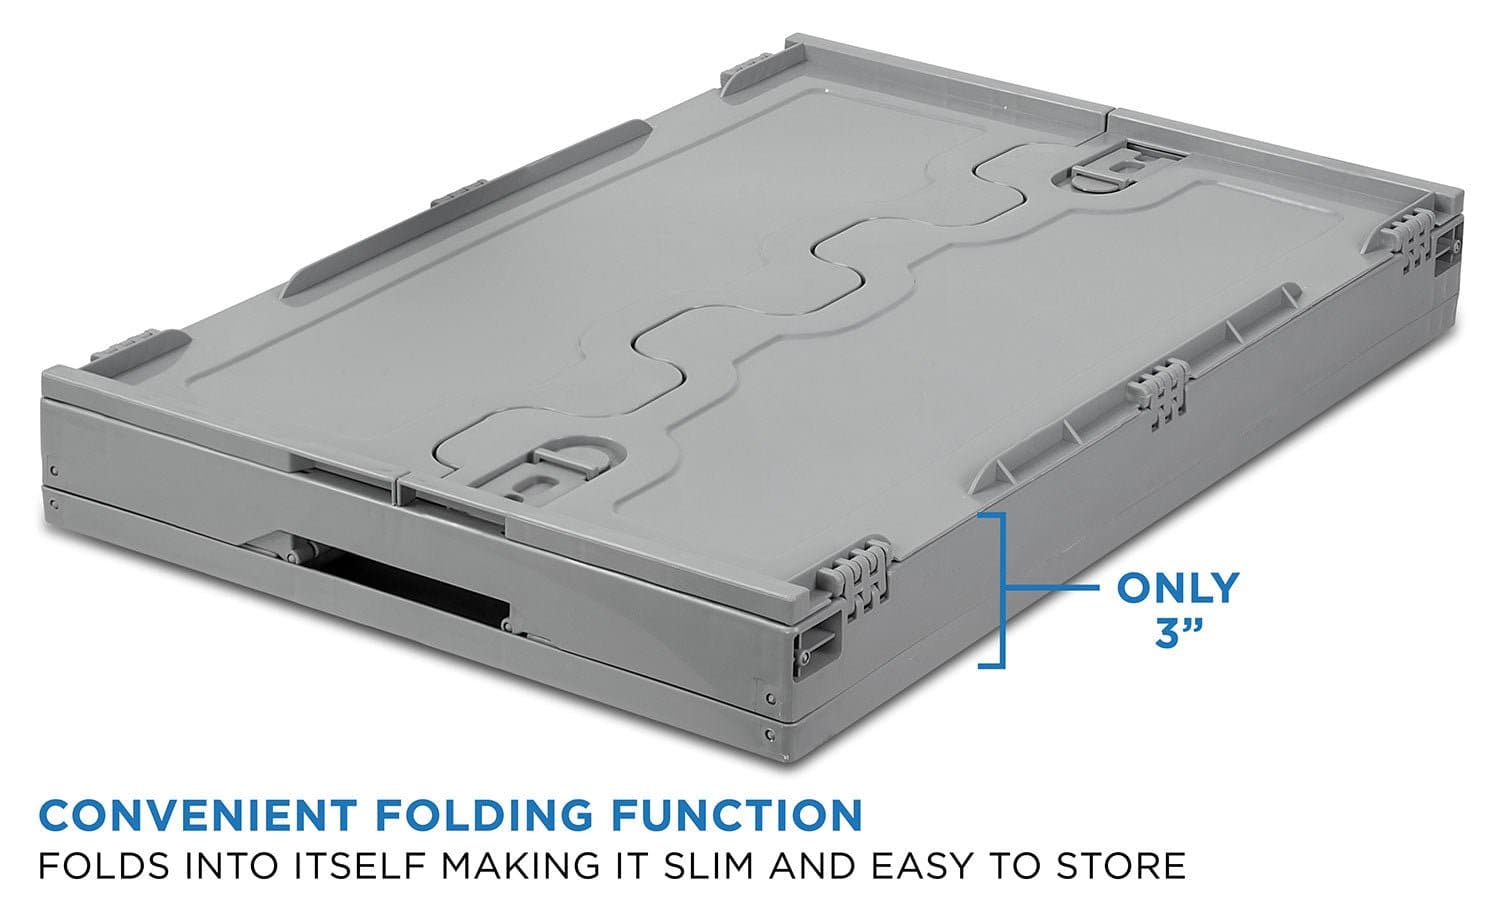 Folding Plastic Storage Crate - MI-909 - by Mount-It!